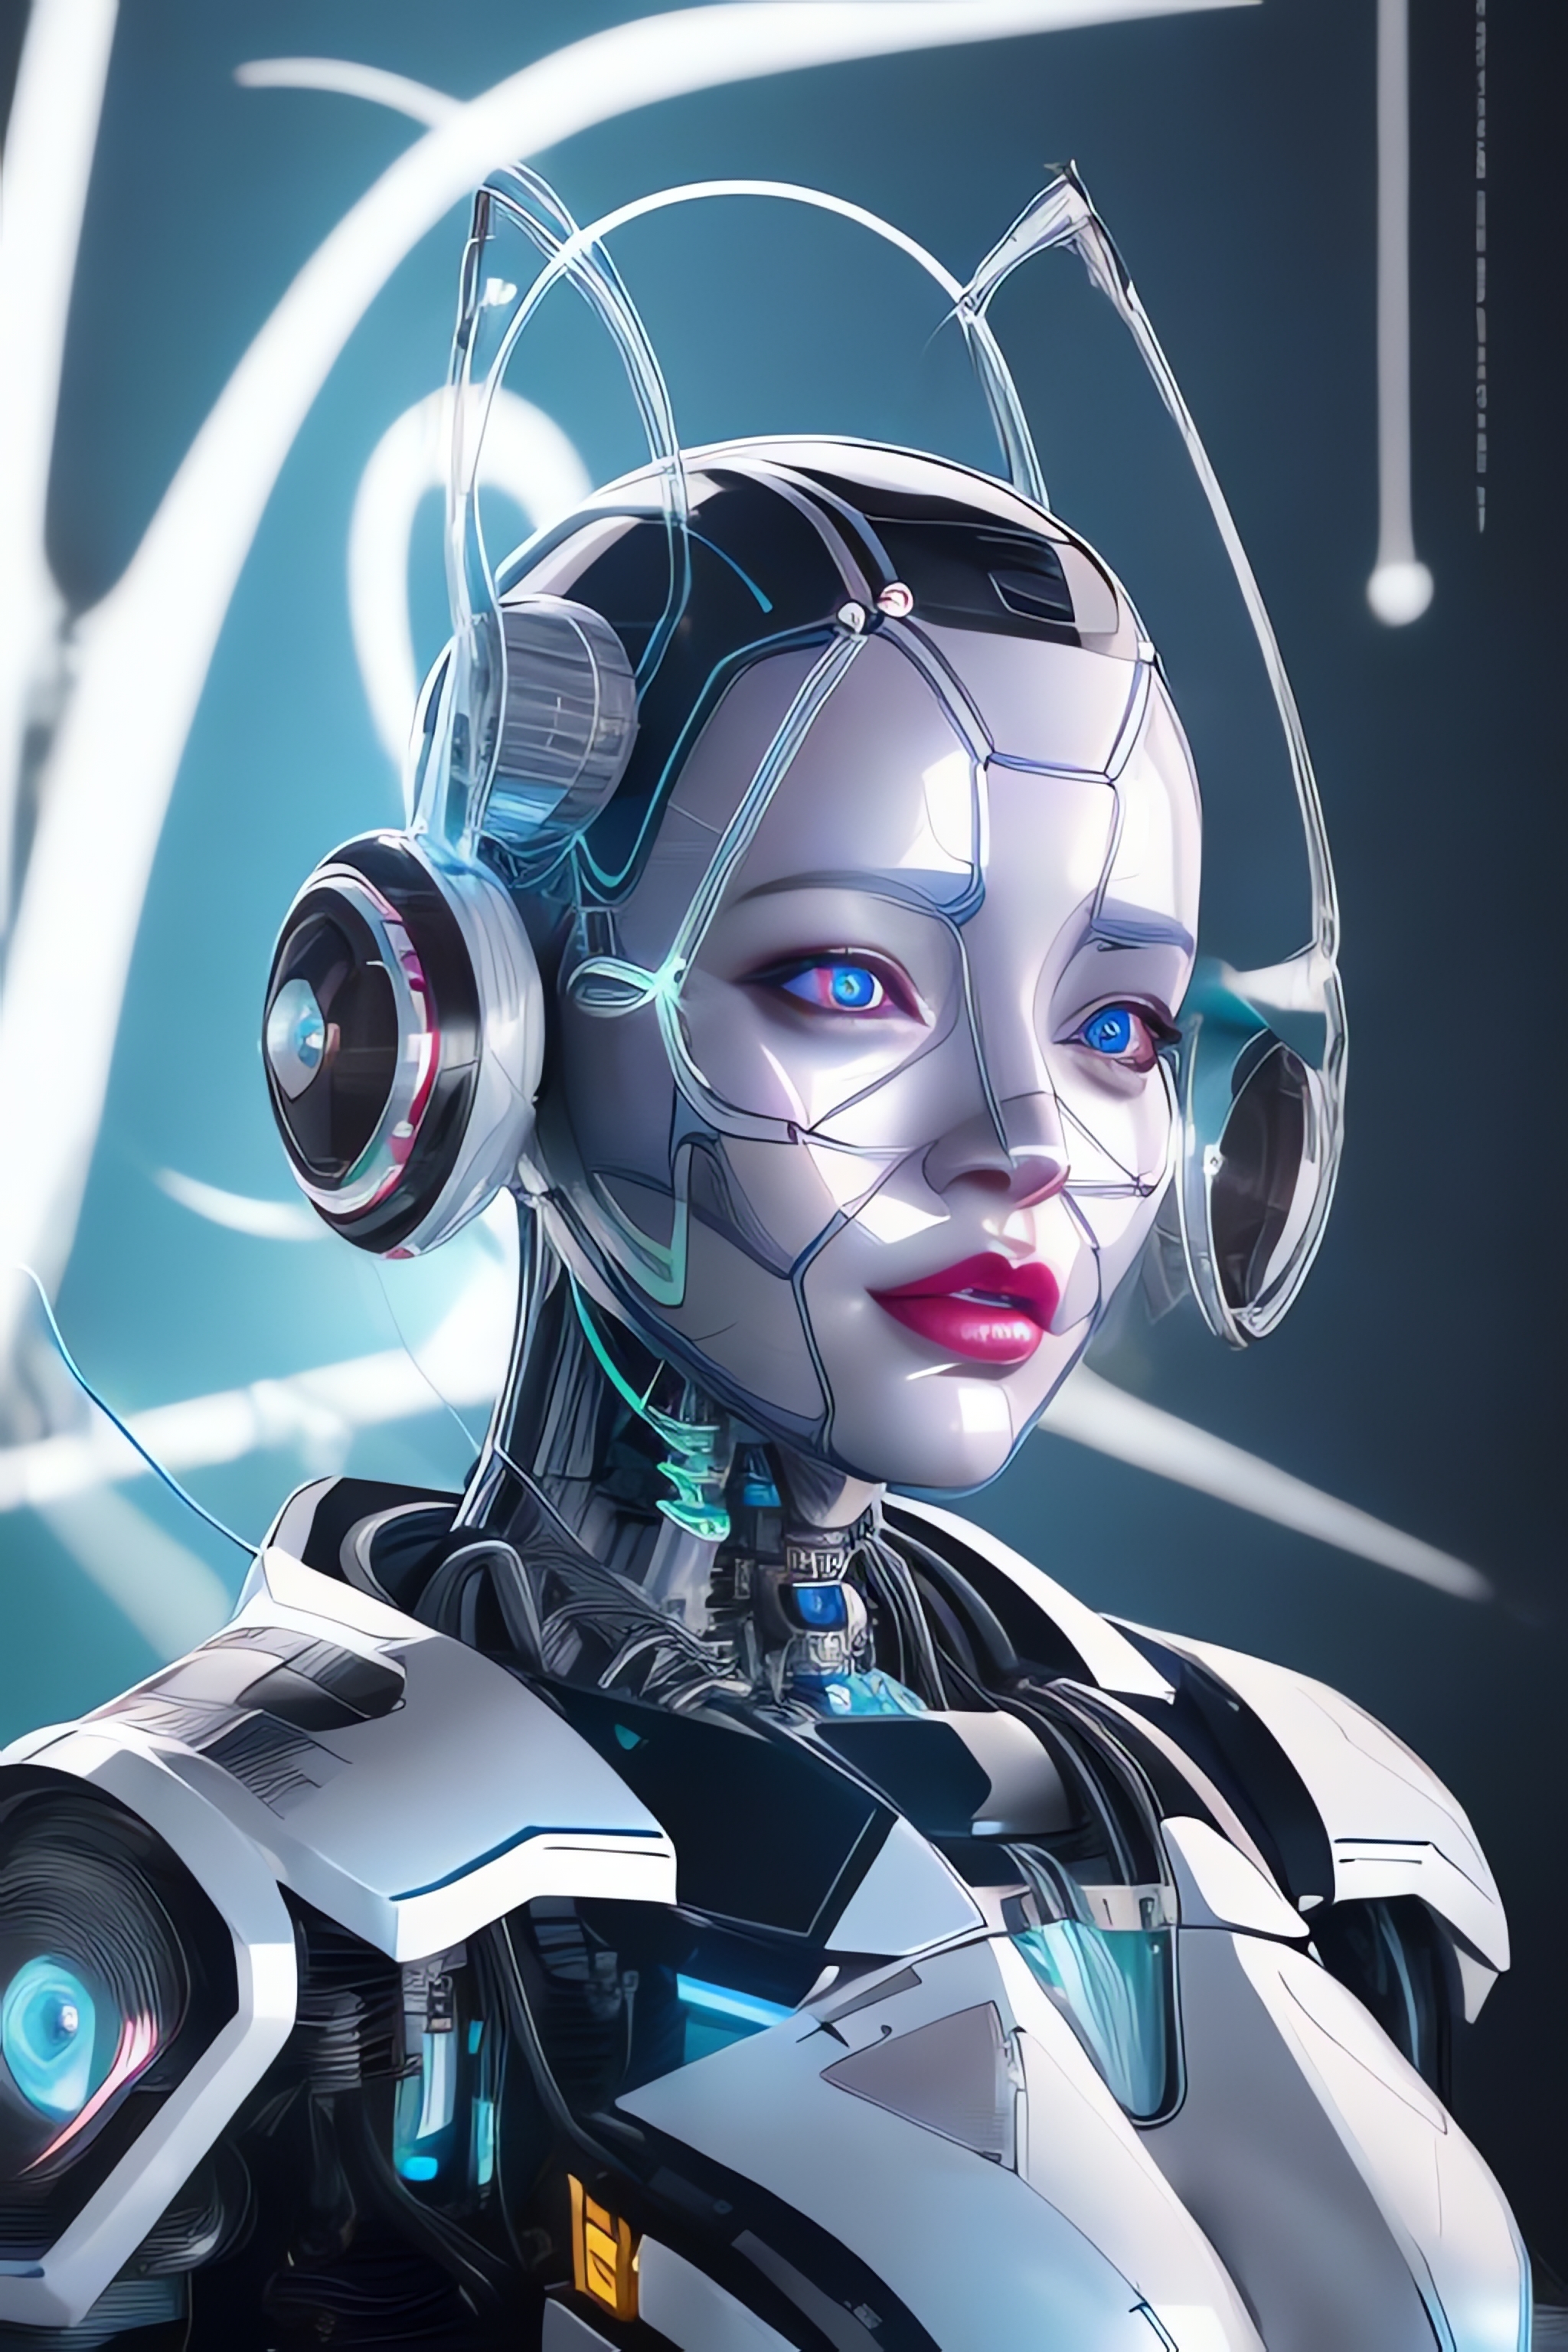 Humanoid robot concept design